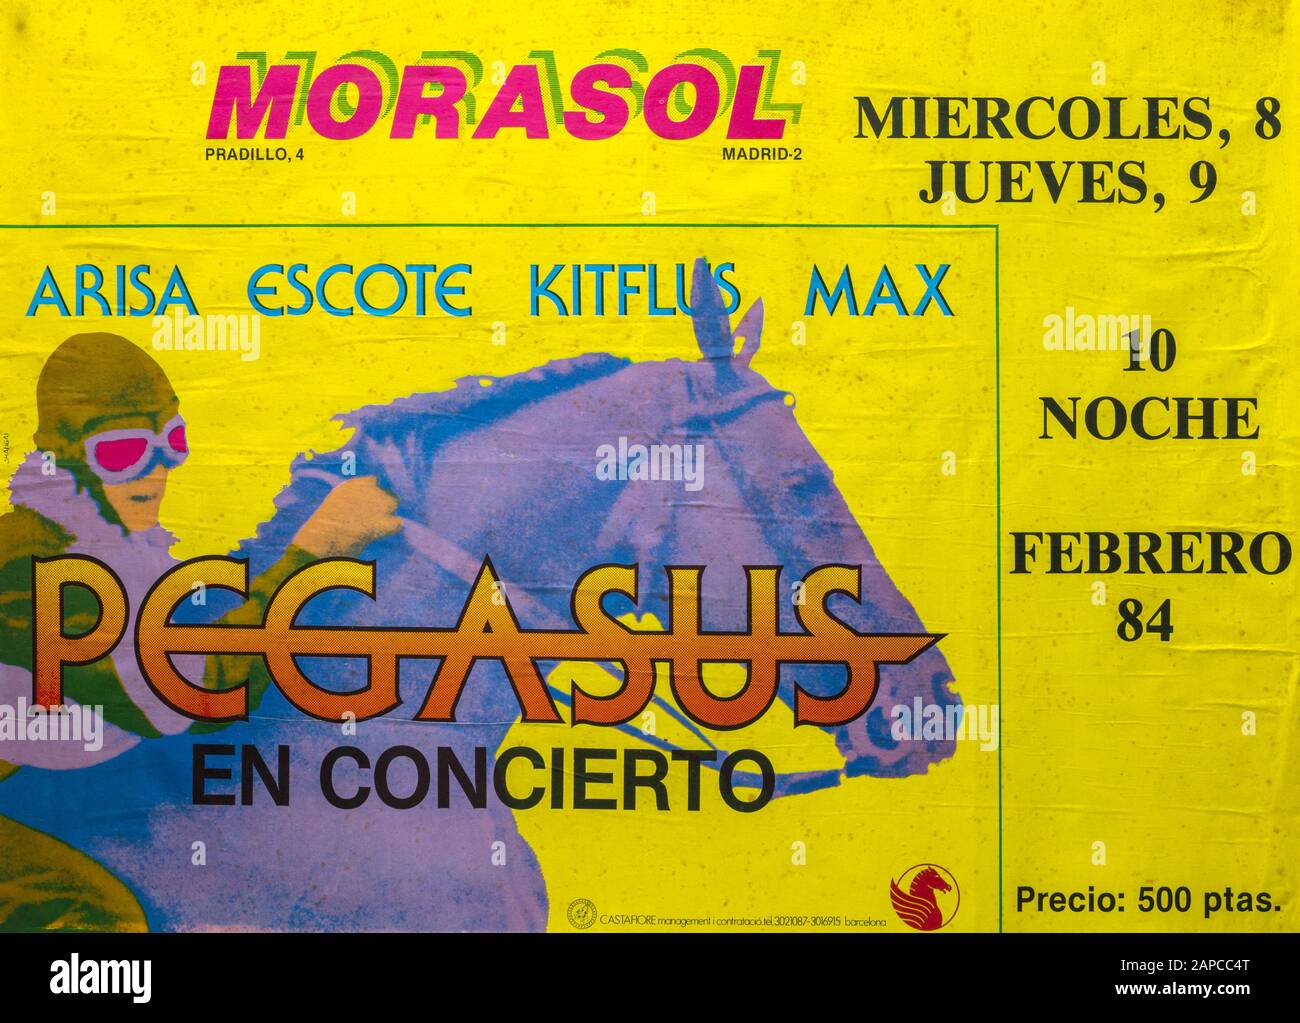 Pegasus en concierto, Sala Morasol, Madrid 1982, Musikalisches Konzertplakat Stockfoto